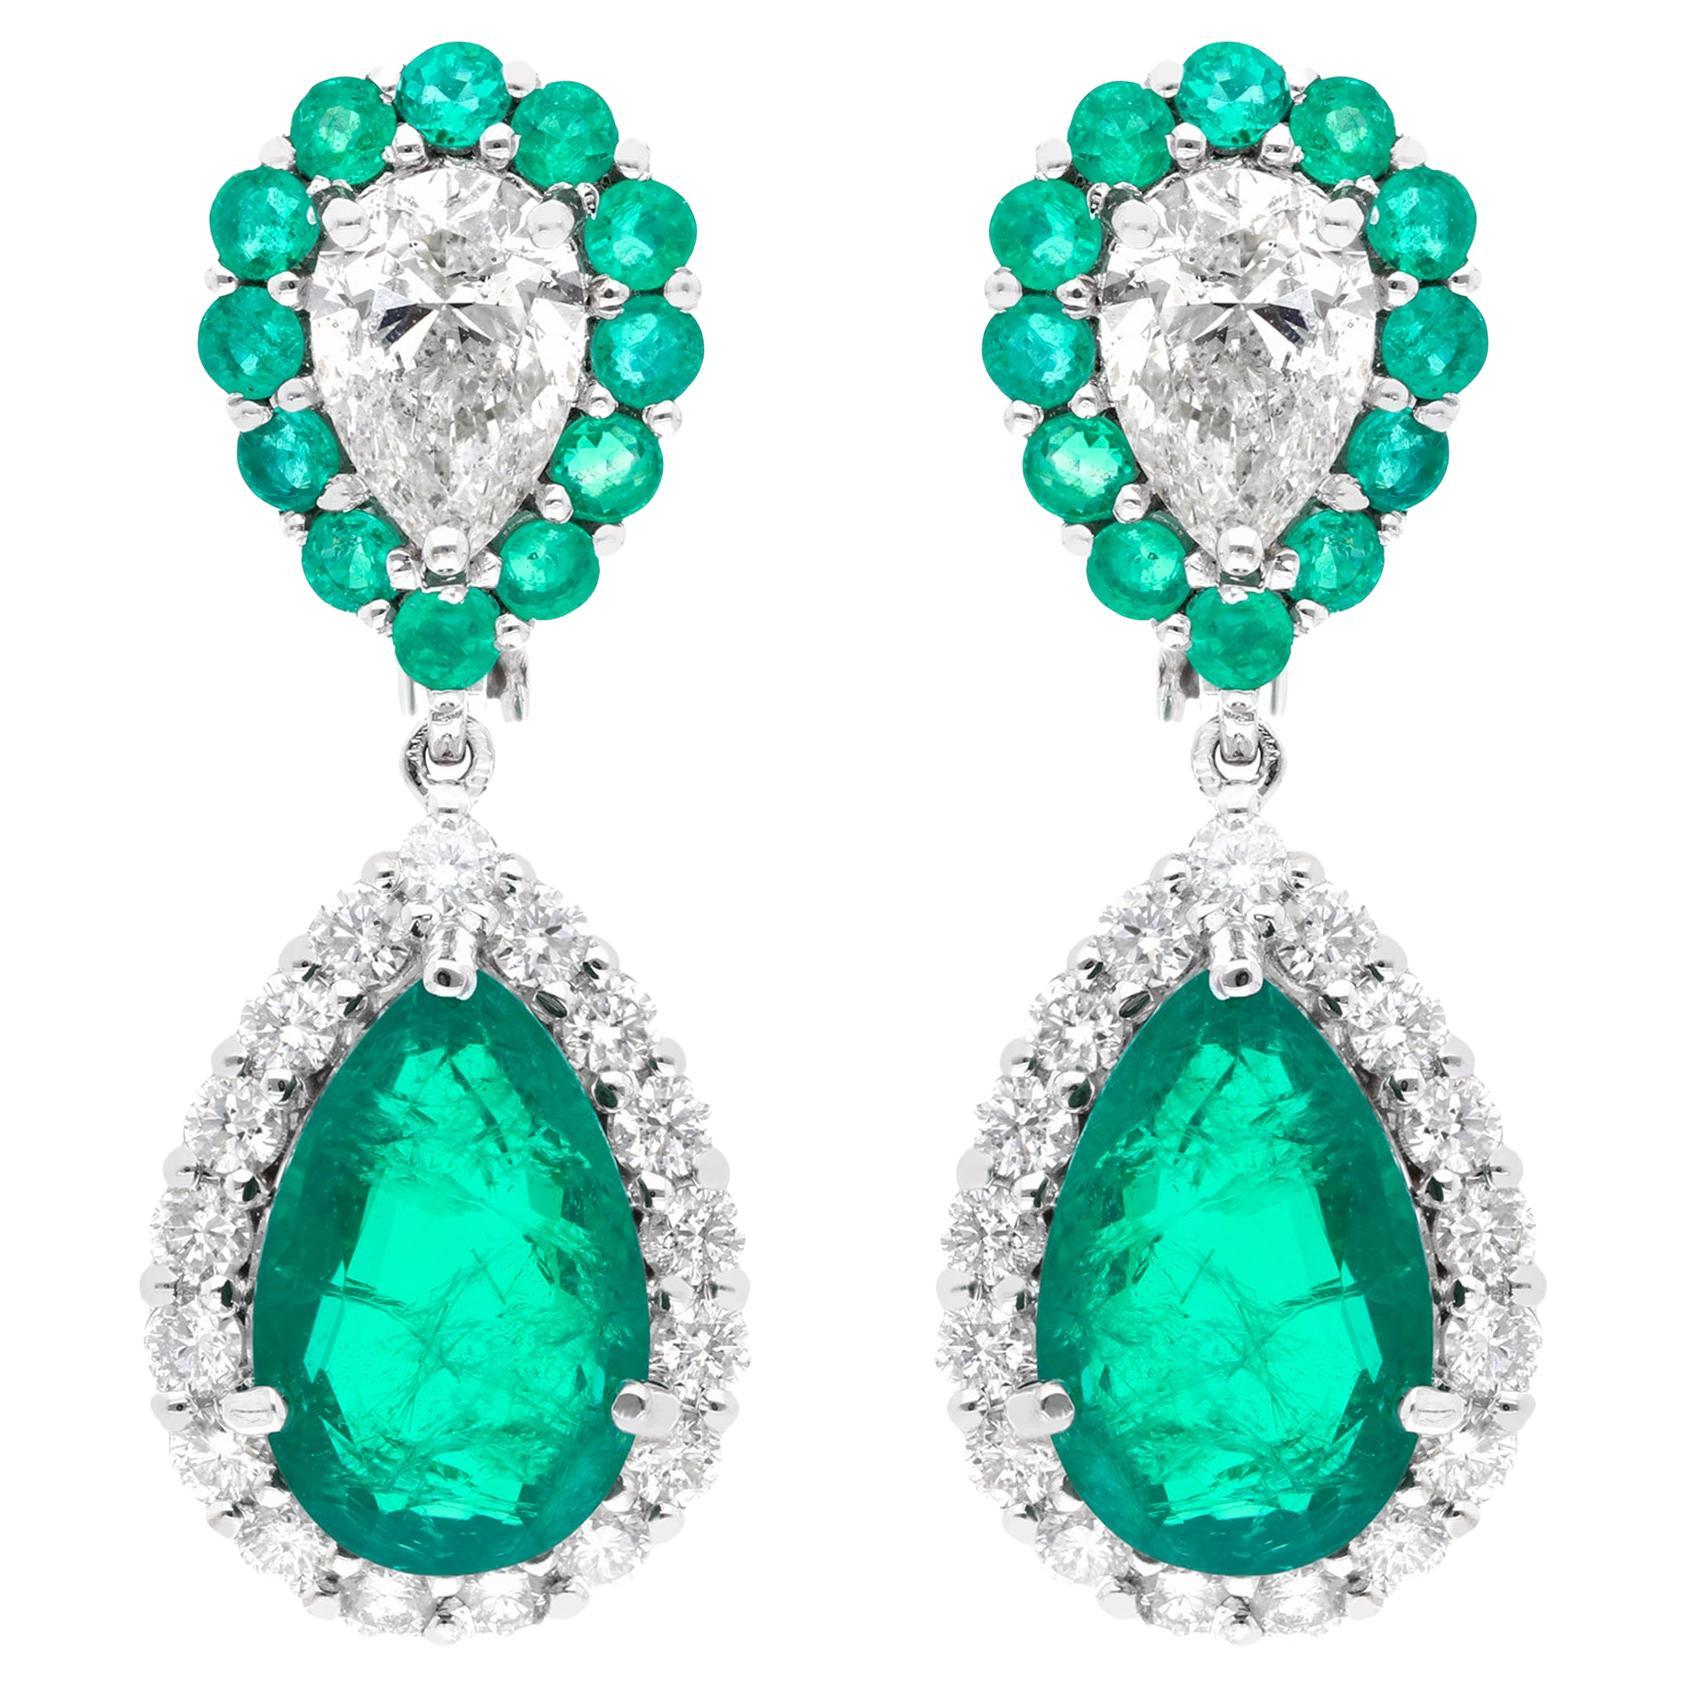 Zambian Emerald Gemstone Dangle Earrings Diamond 14 Karat White Gold Jewelry